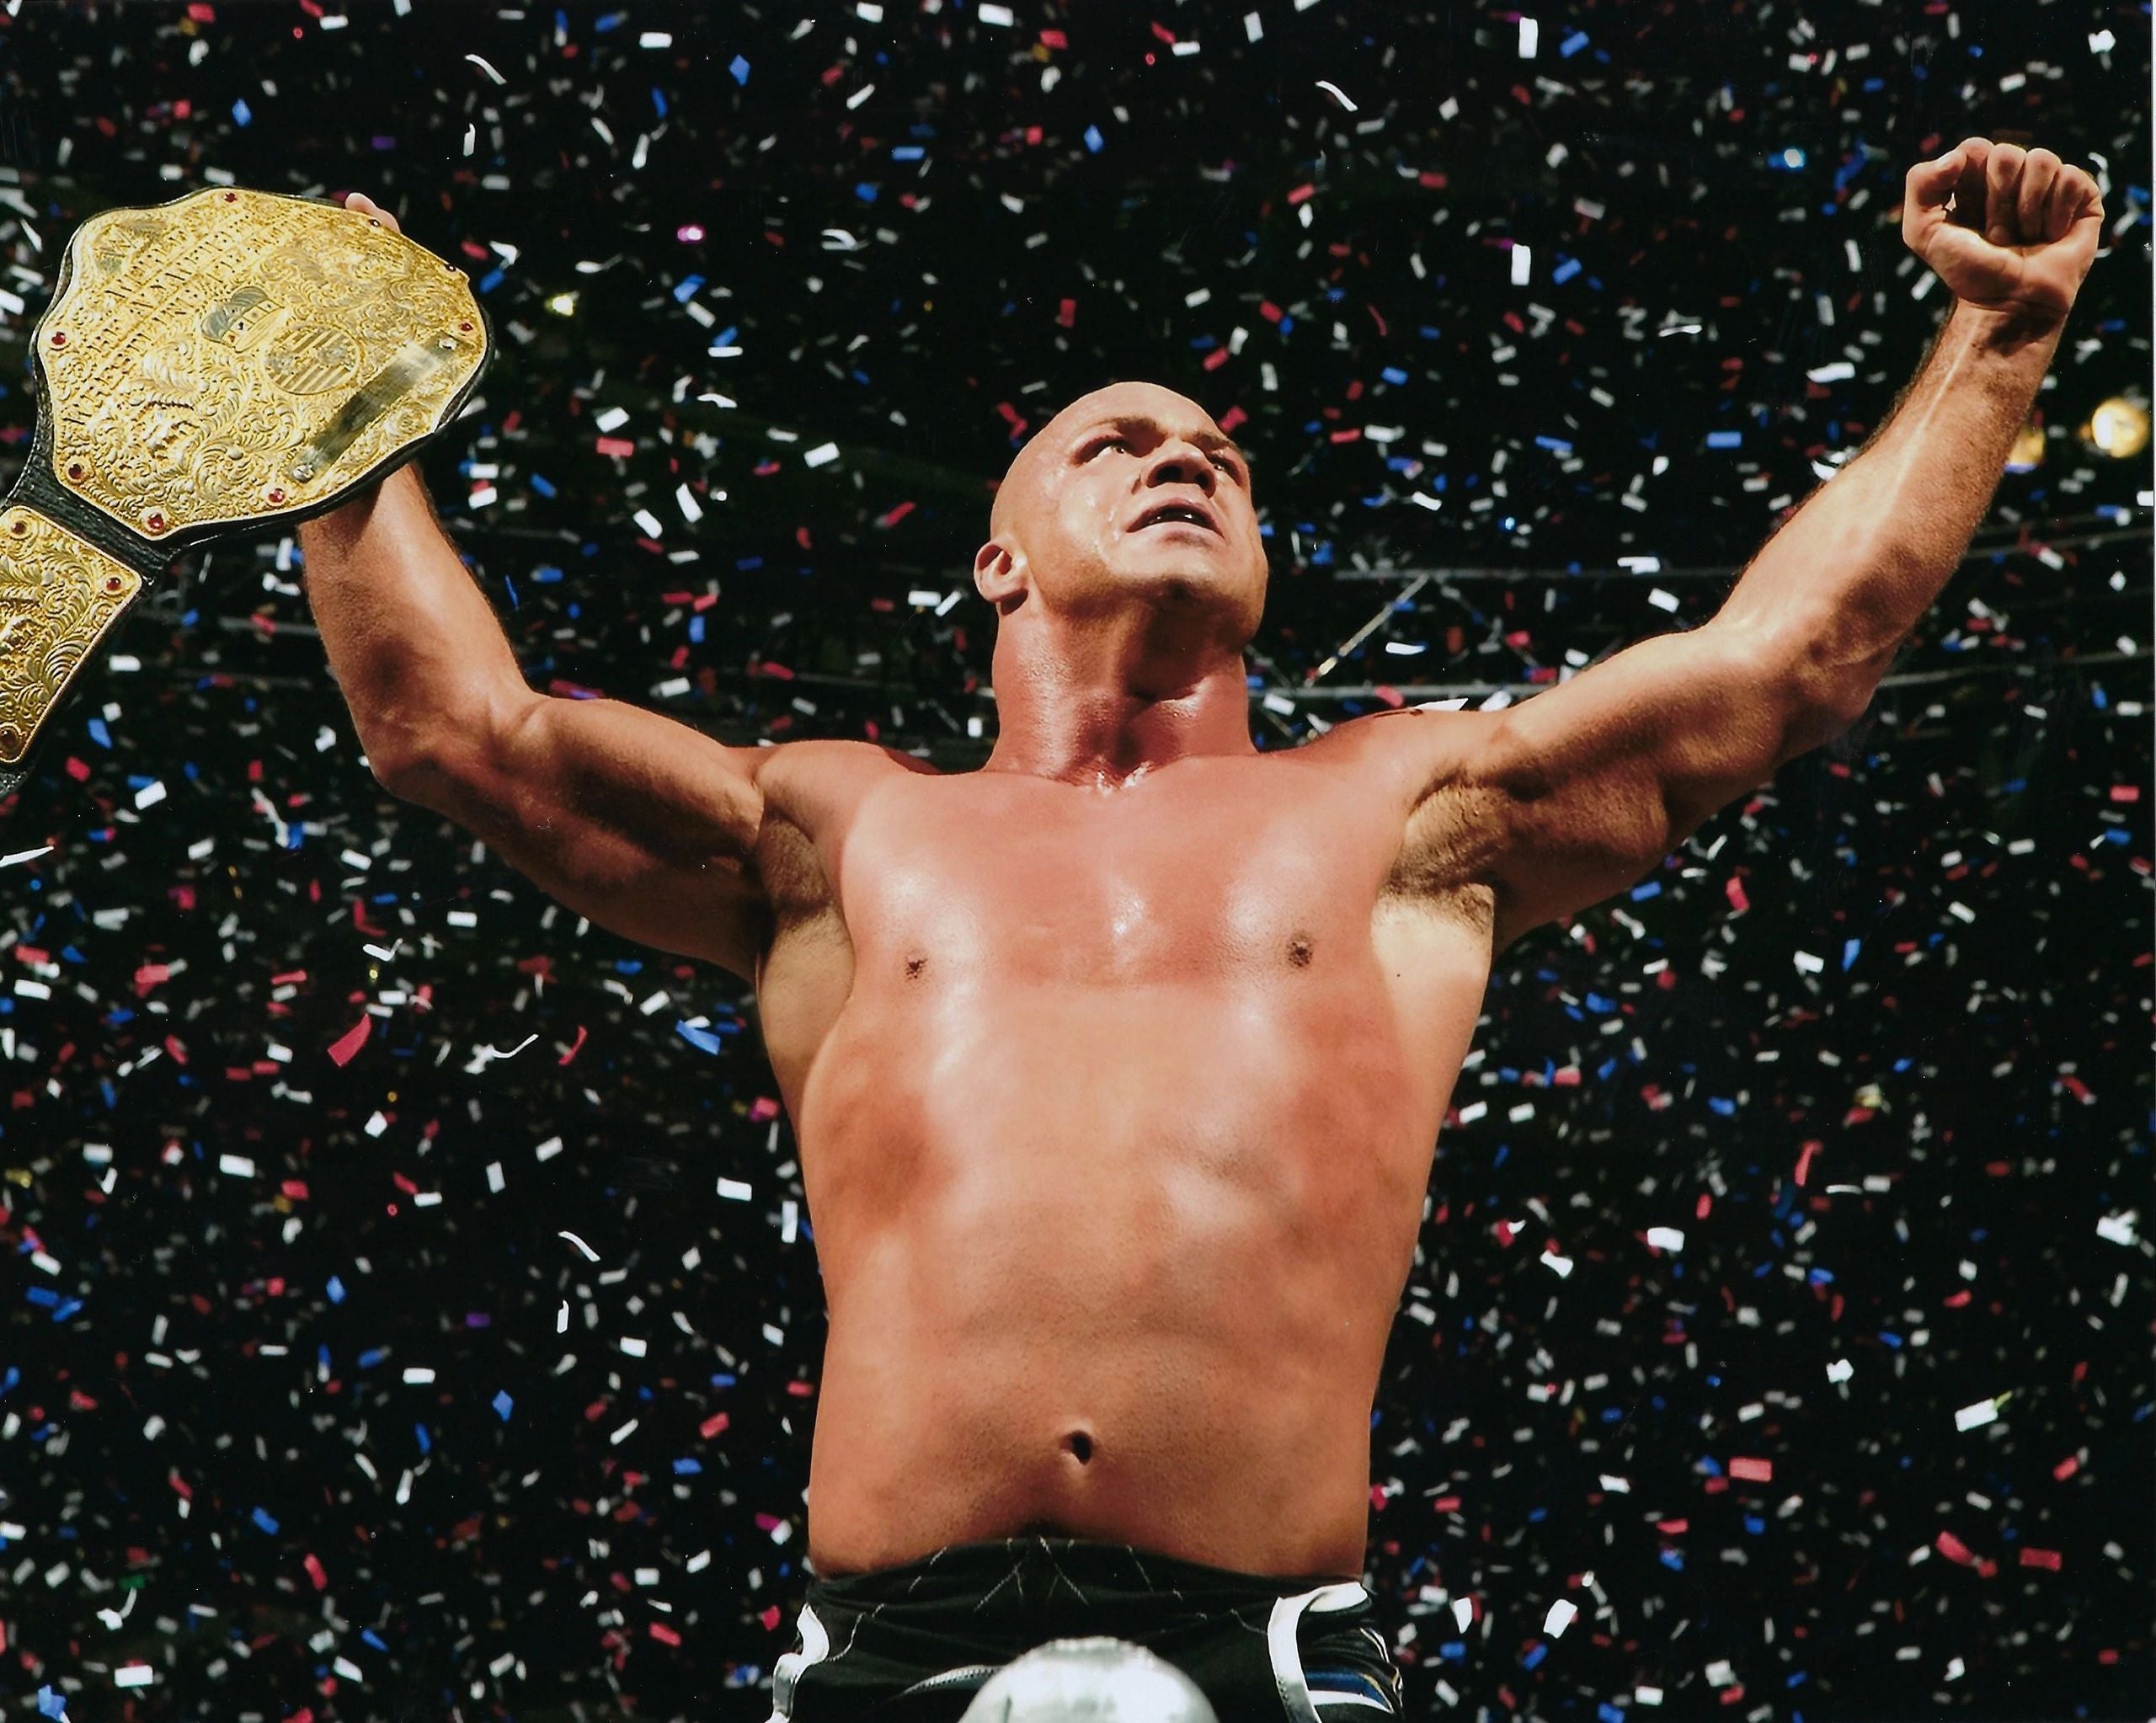 Kurt Angle Signed 8x10 Photo Championship Belt Held over his head with Confetti W/JSA COA